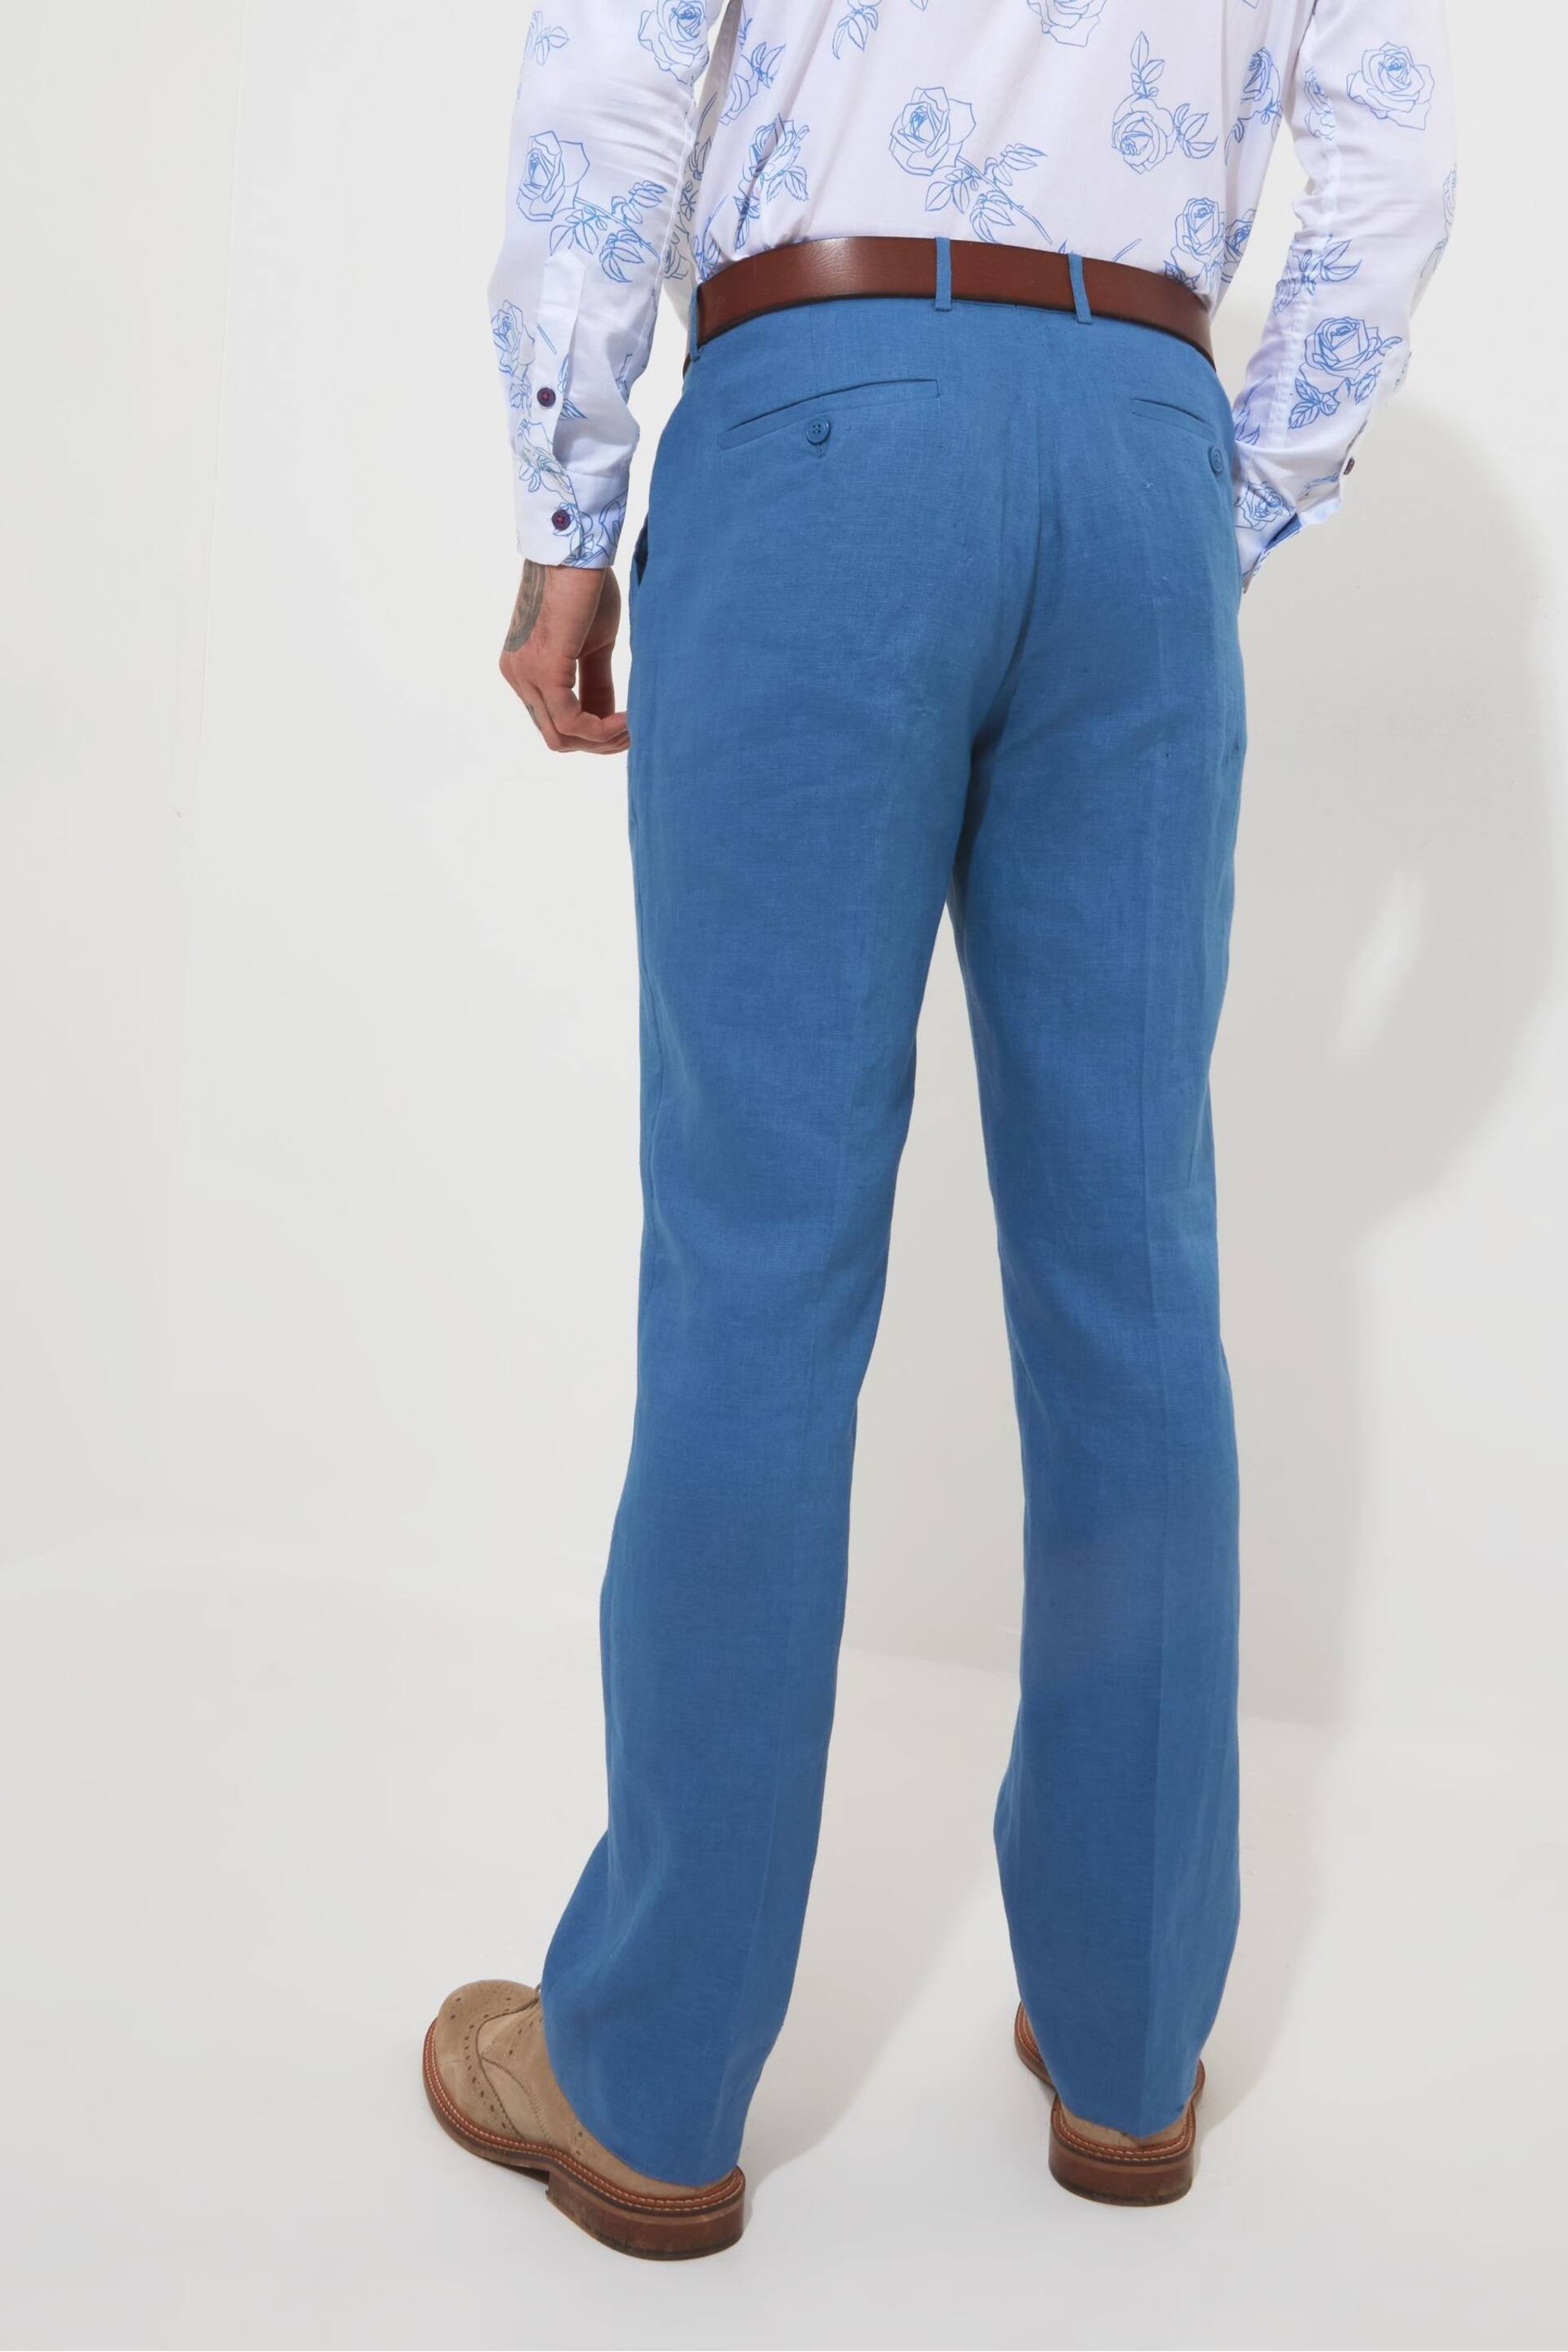 Joe Browns Blue Regular Fit Straight Leg Linen Suit: Trousers - Image 3 of 5